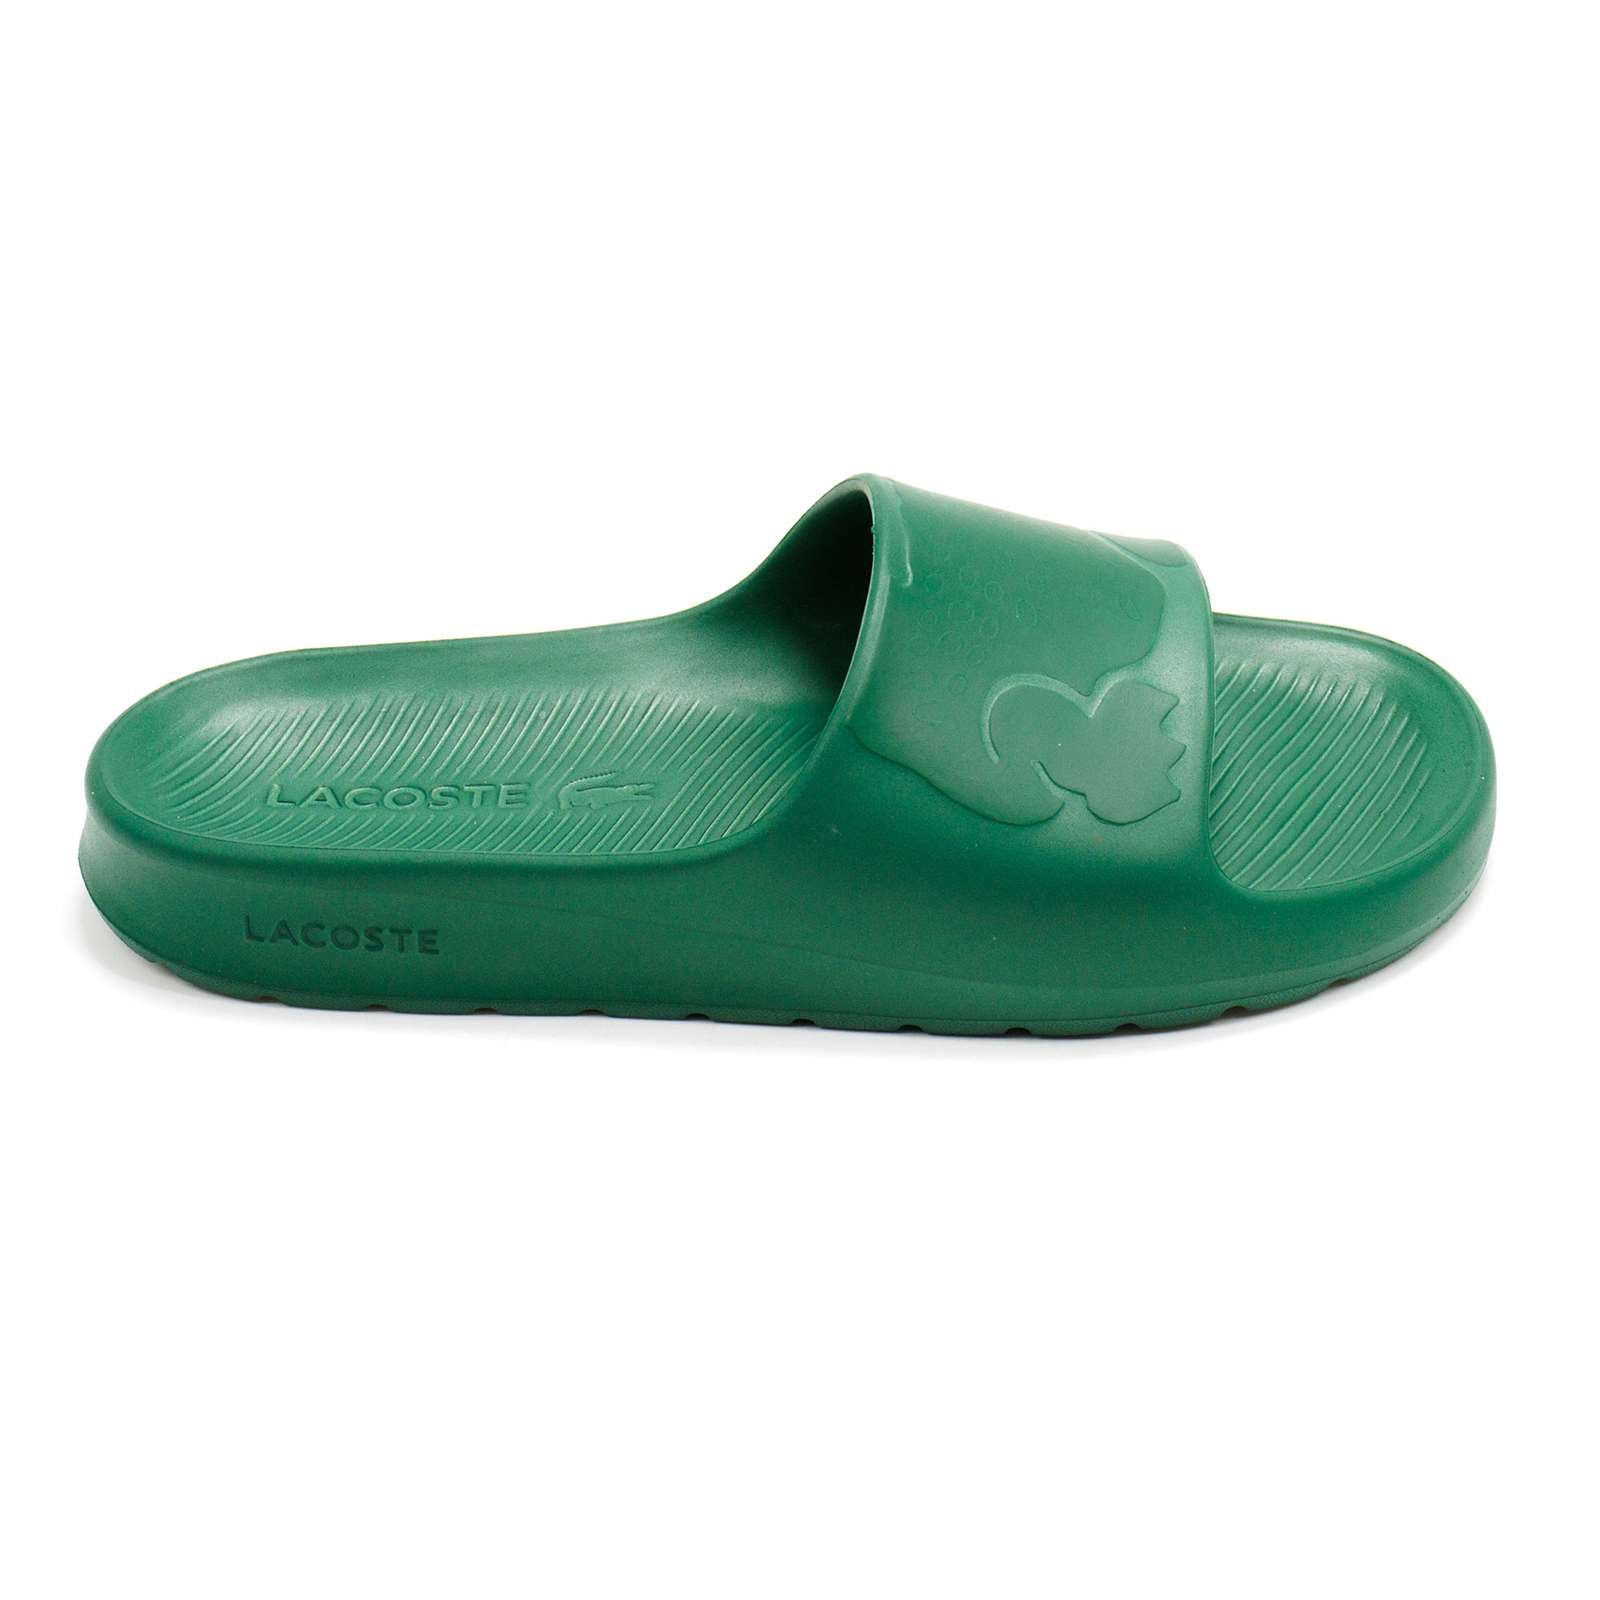 Lacoste Men Croco 2.0 1122 2 Slide Sandals